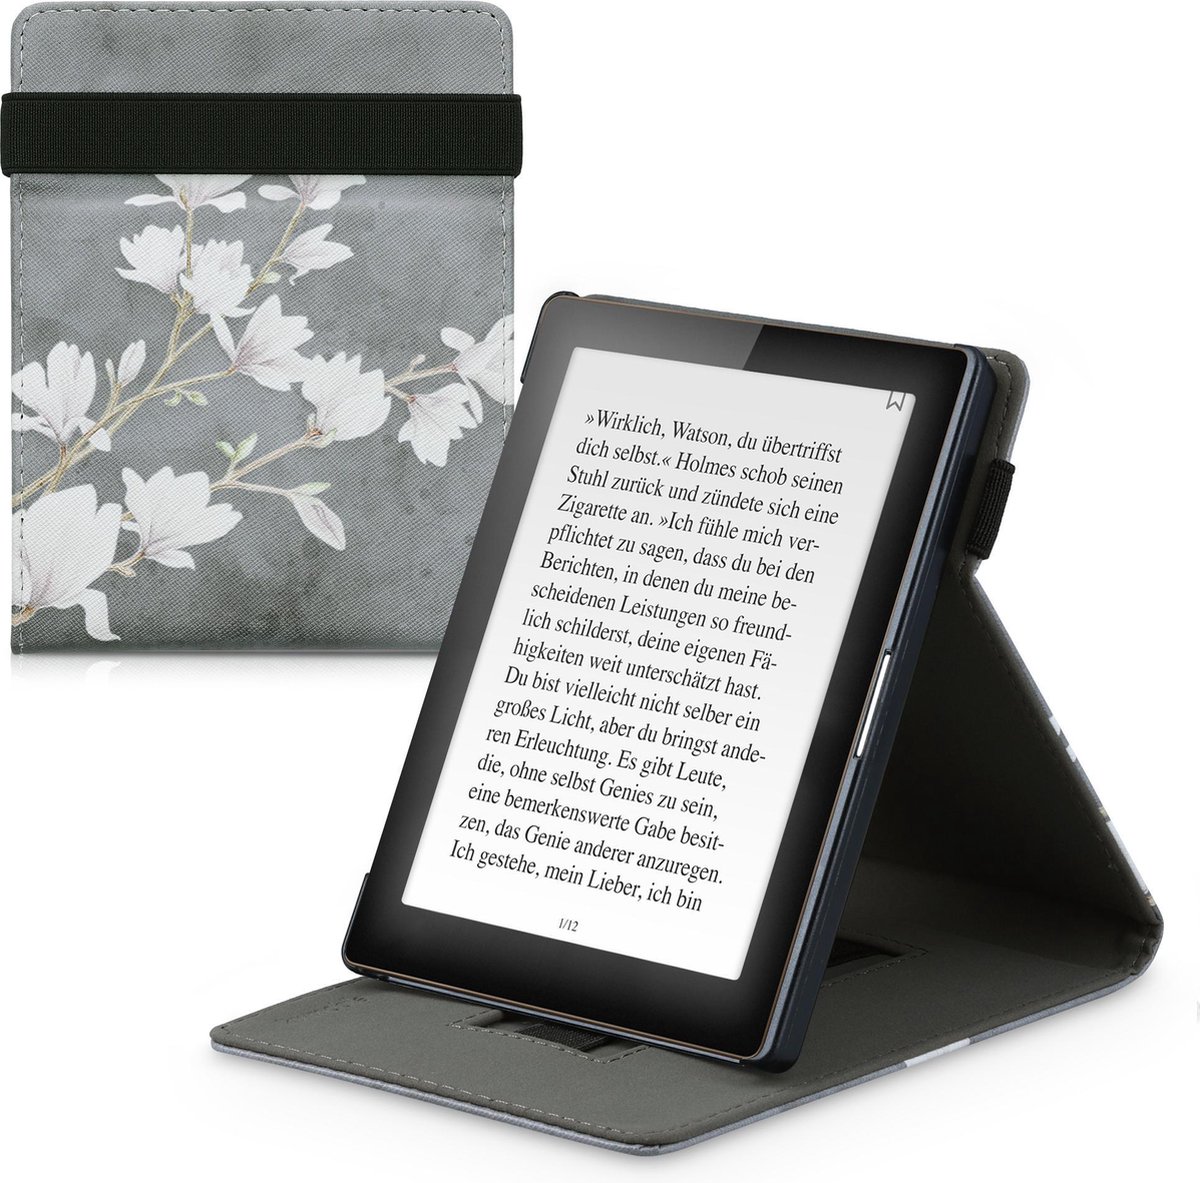 Étui adapté pour Kobo Nia Case Bookcase Cover Case avec protecteur d'écran  - Kobo Nia